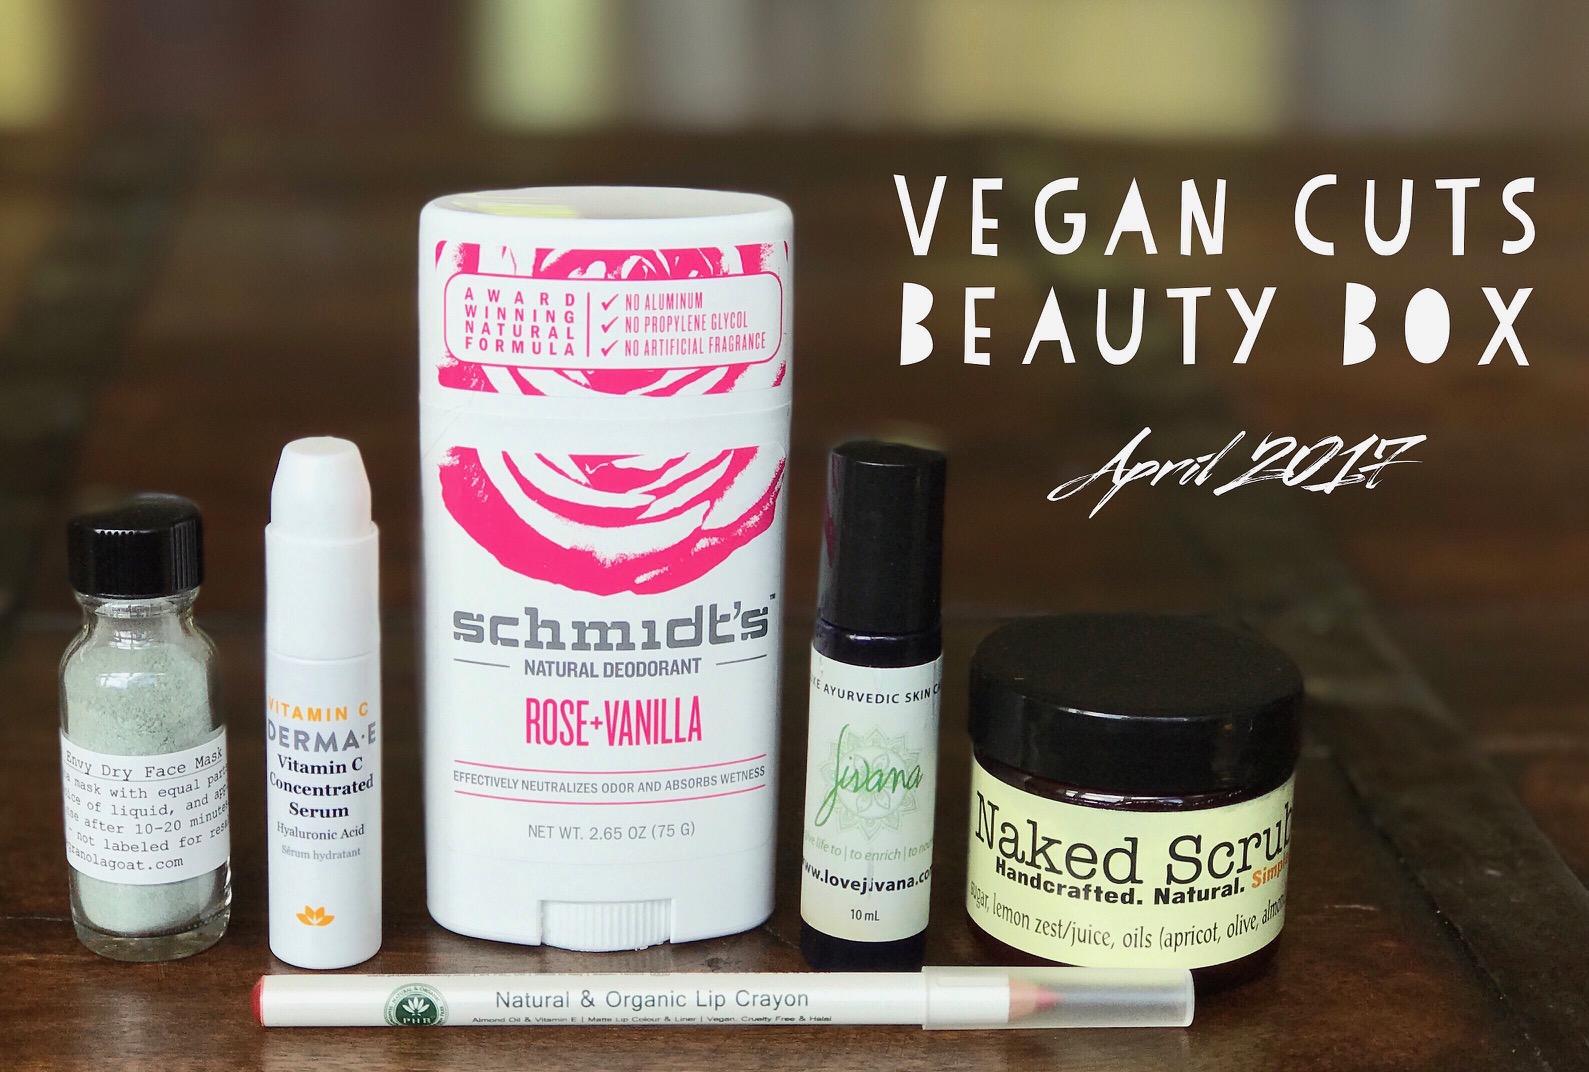 Vegan Cuts Beauty Box April 2017